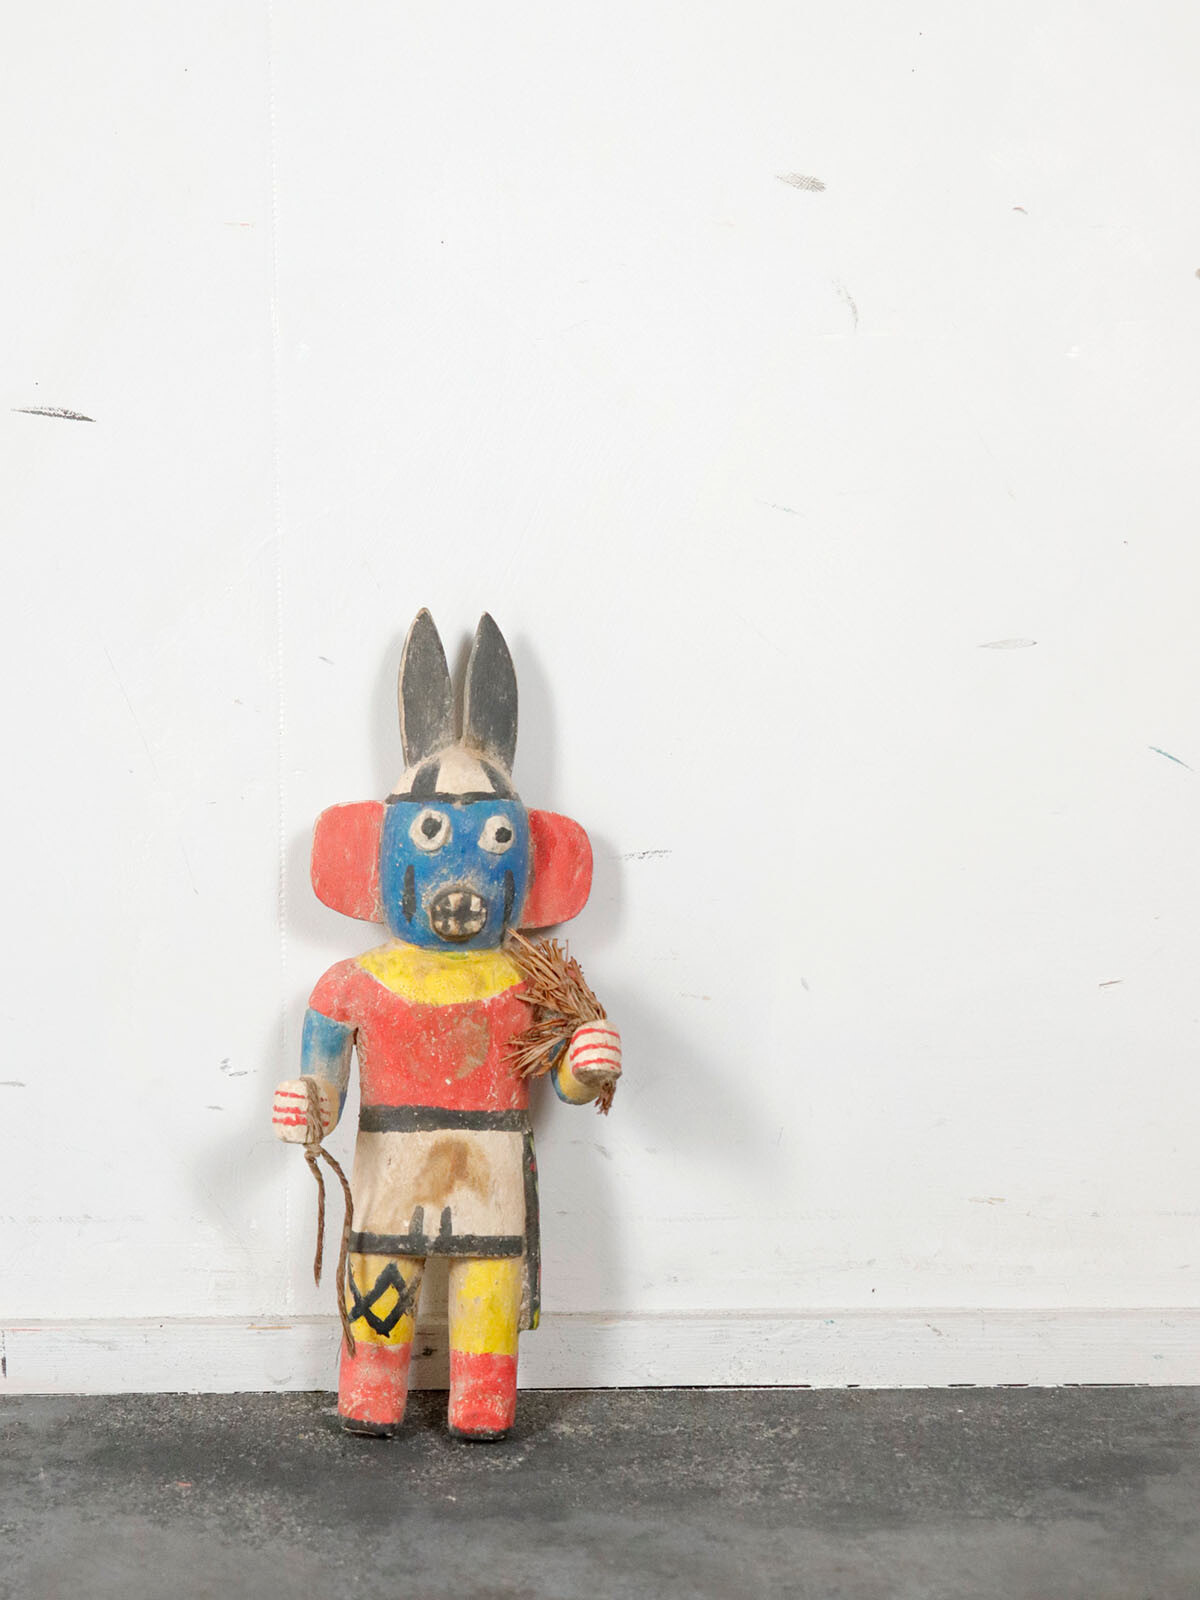 Native american,vintage,kachina doll, mid century,hopi,USA